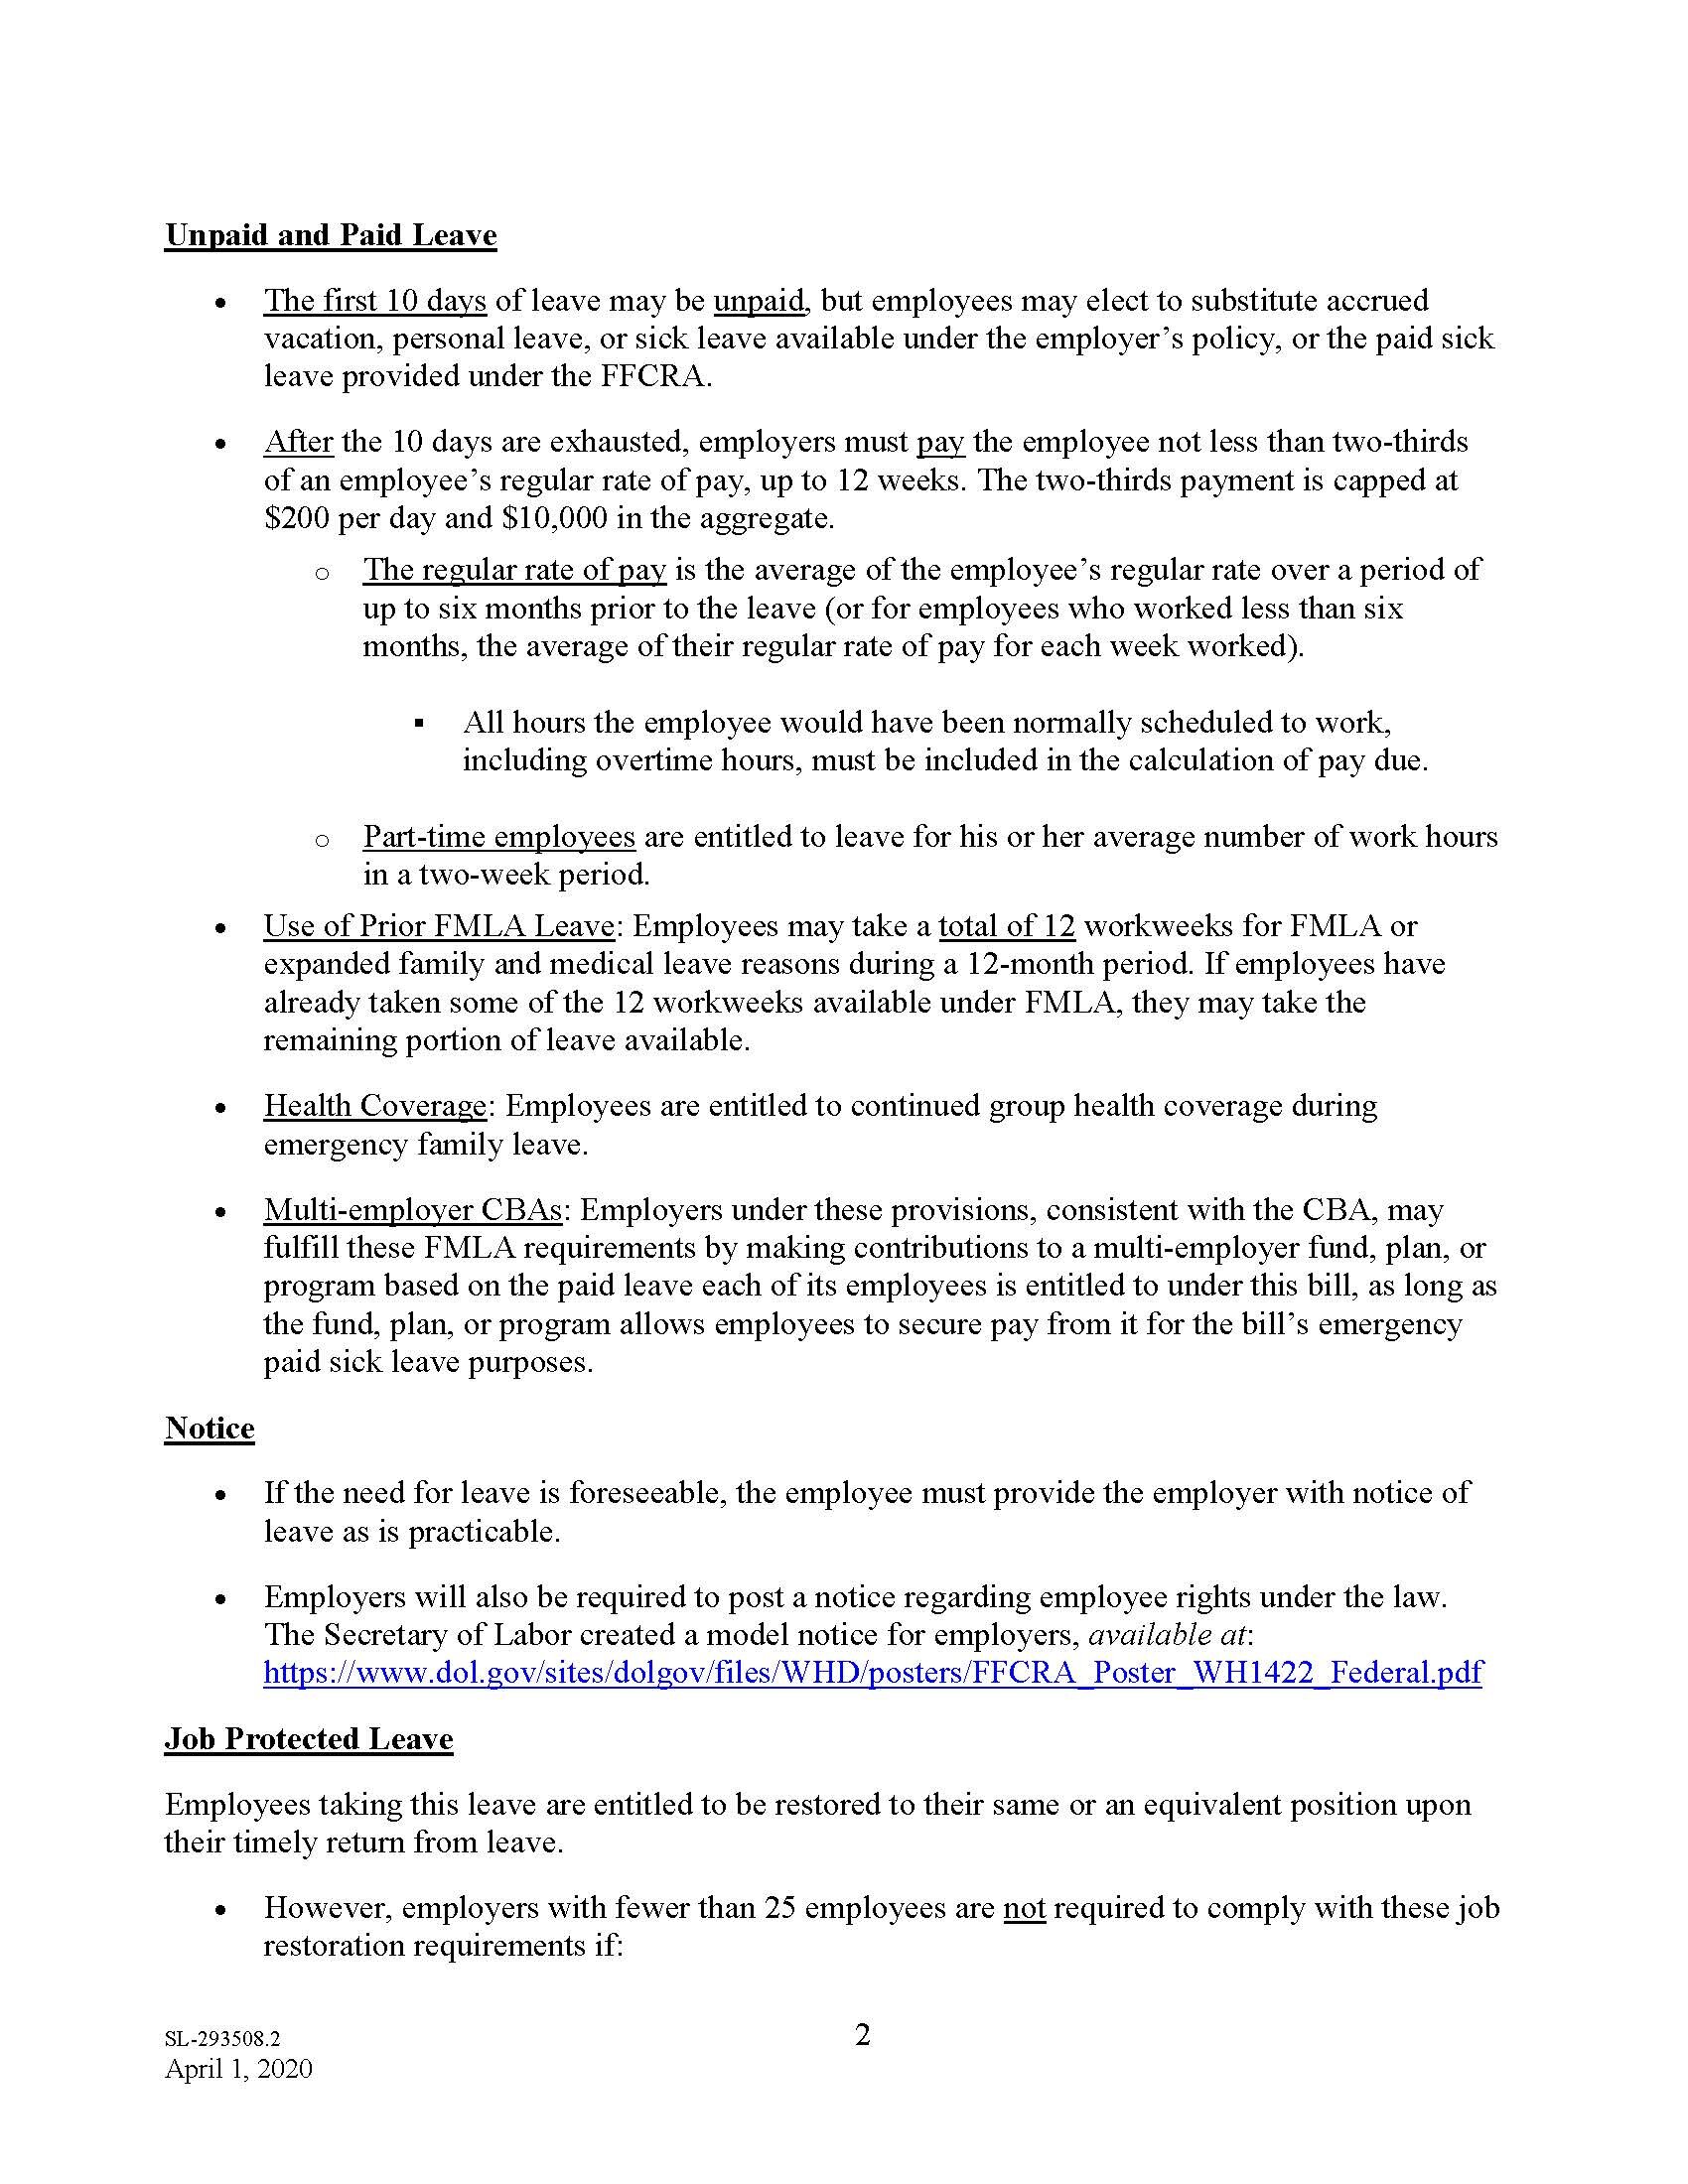 Spviak Lipton Federal Families First Coronavirus Response Act Summary (as of 4.1.20)_Page_2.jpg